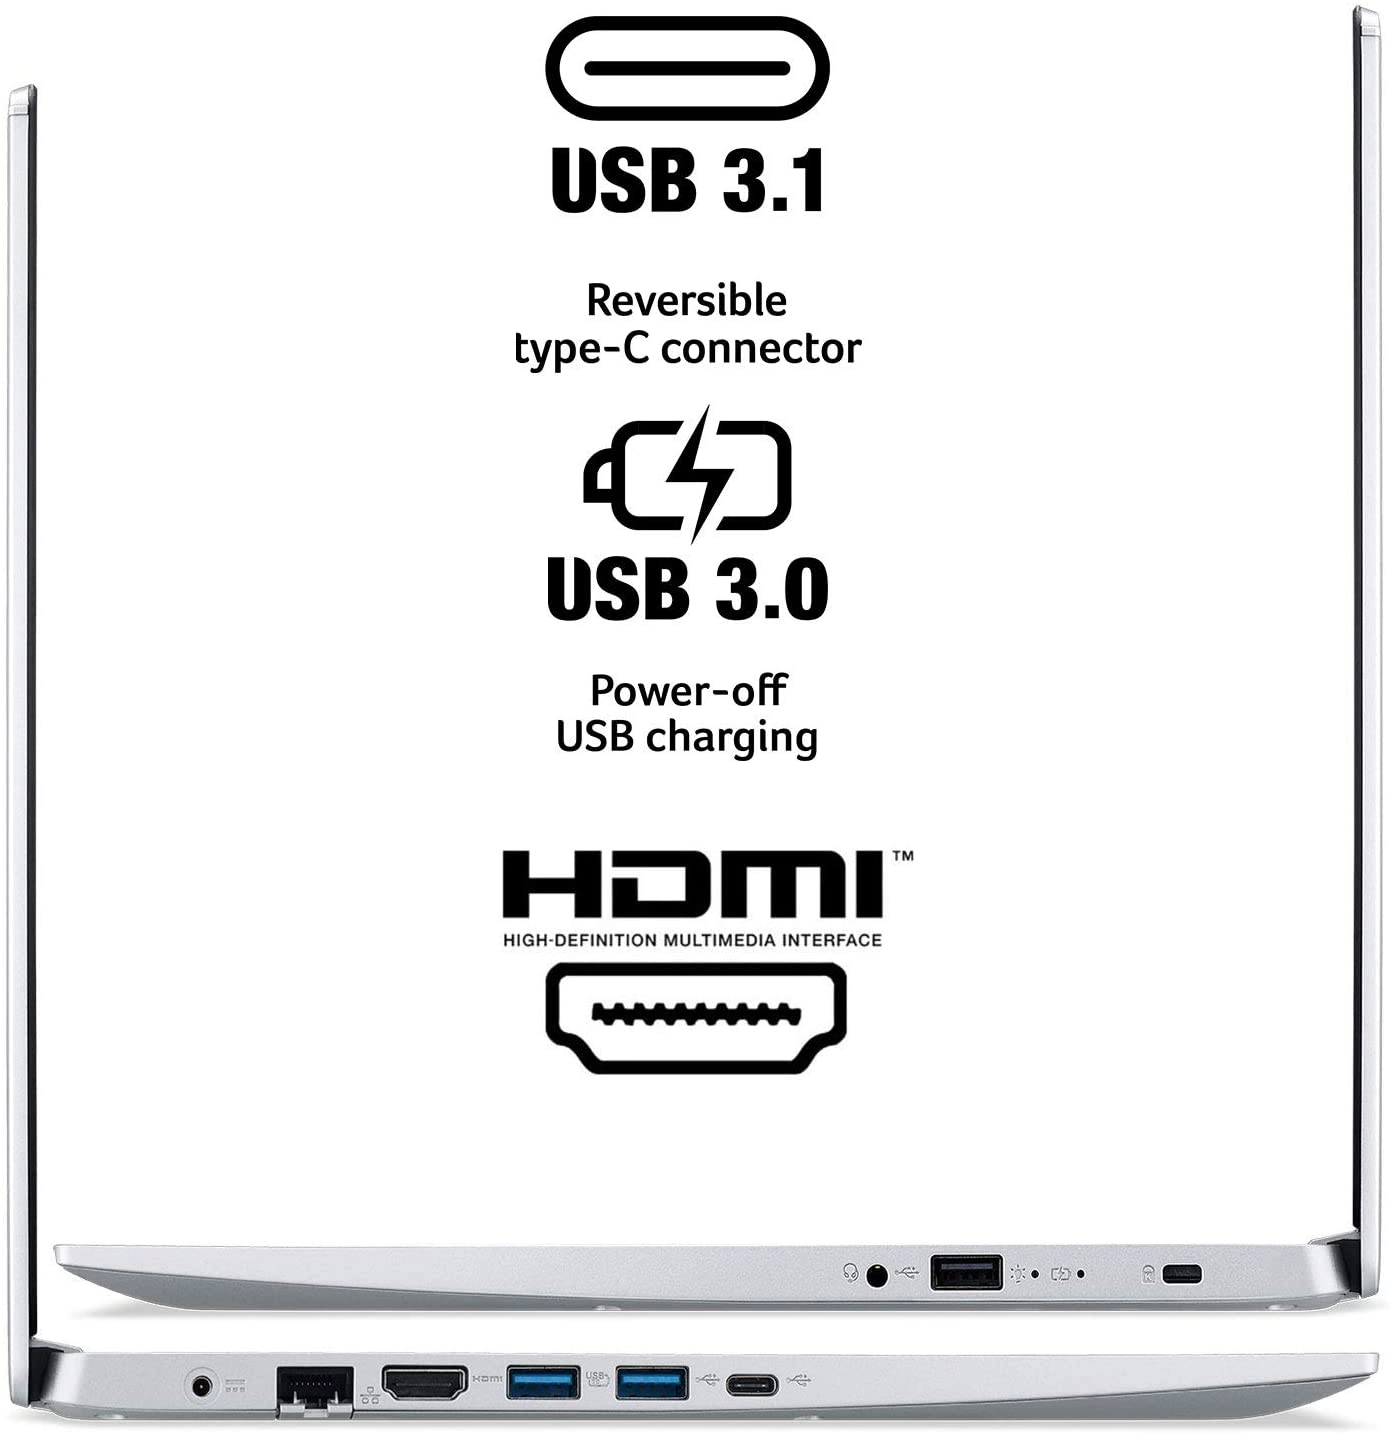 Acer A515-55G-57H8 laptop image